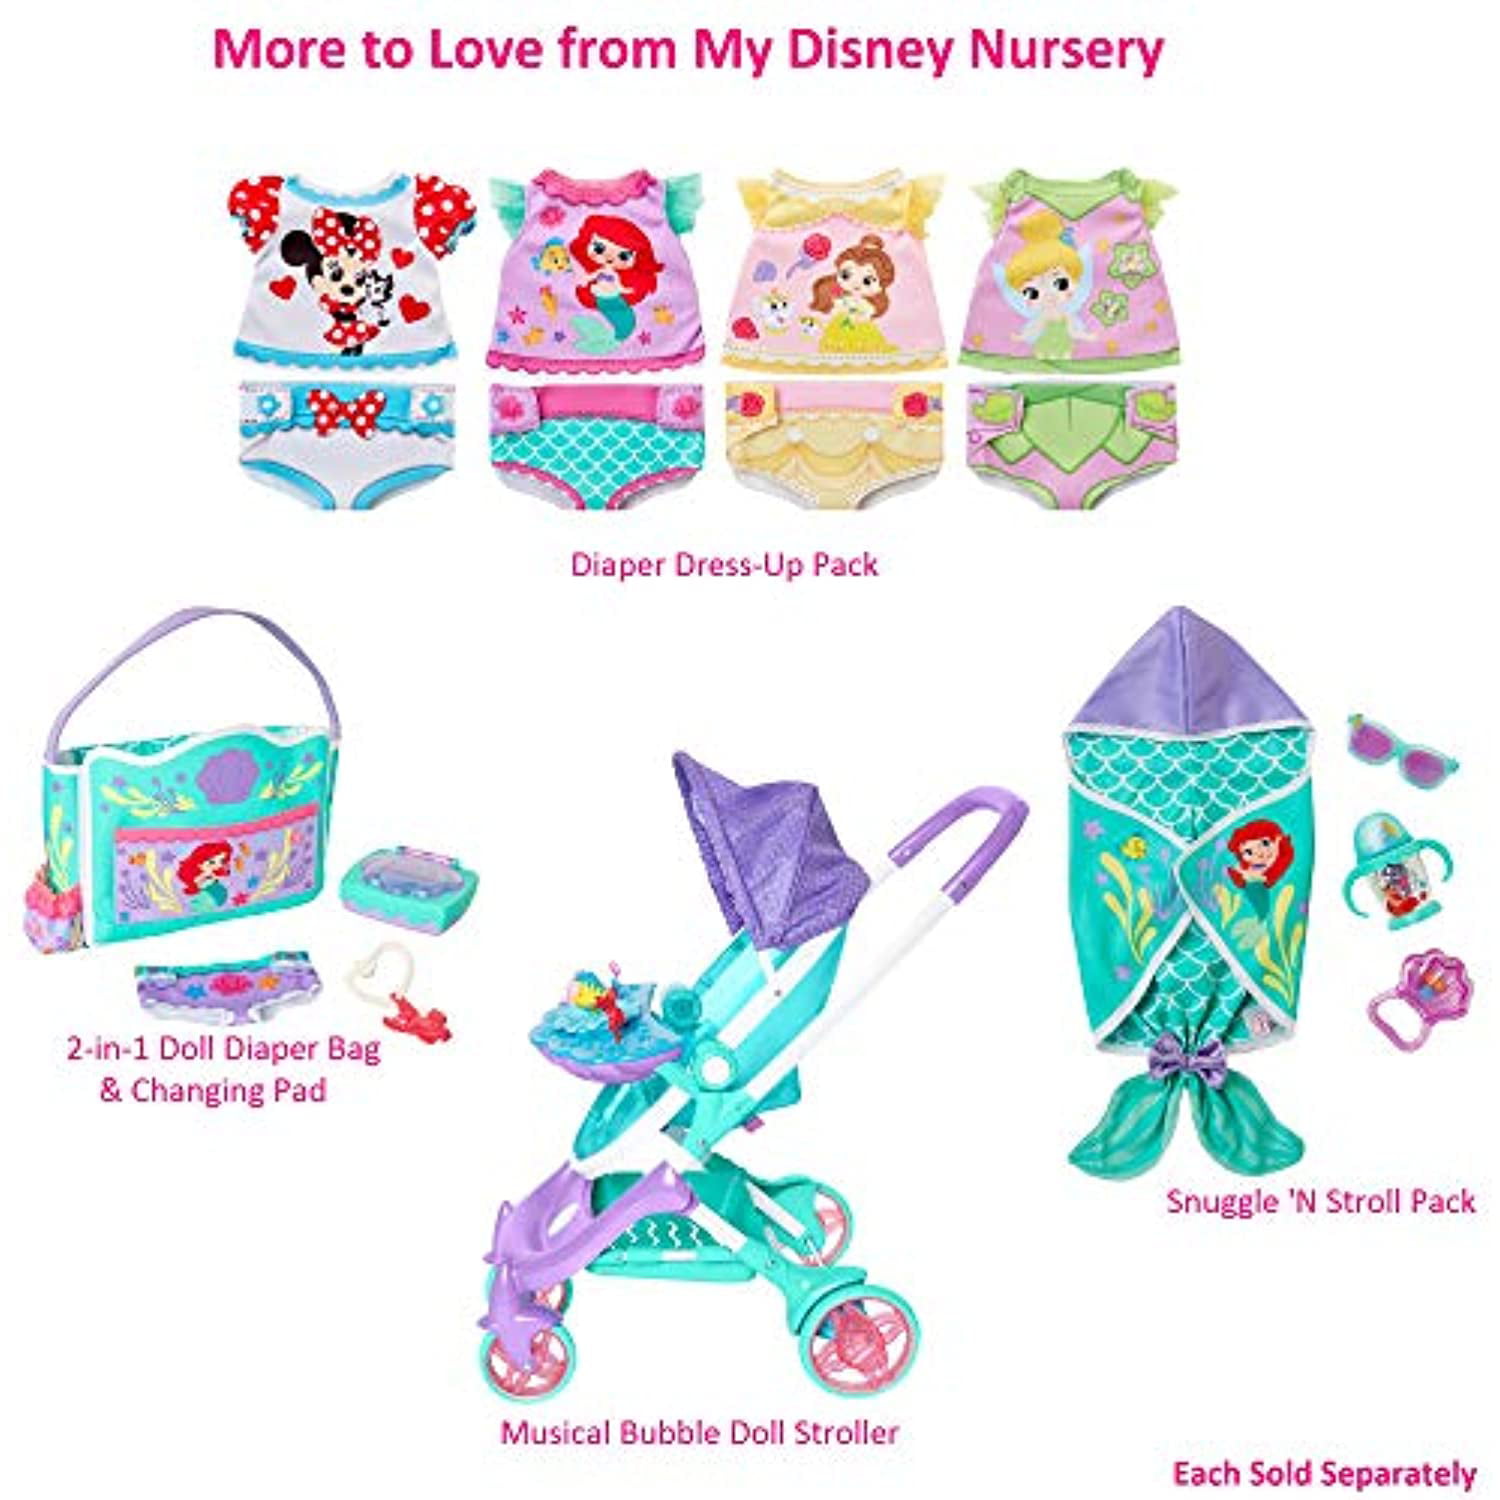 My Disney Nursery Ariel Diaper Accessory Pack 